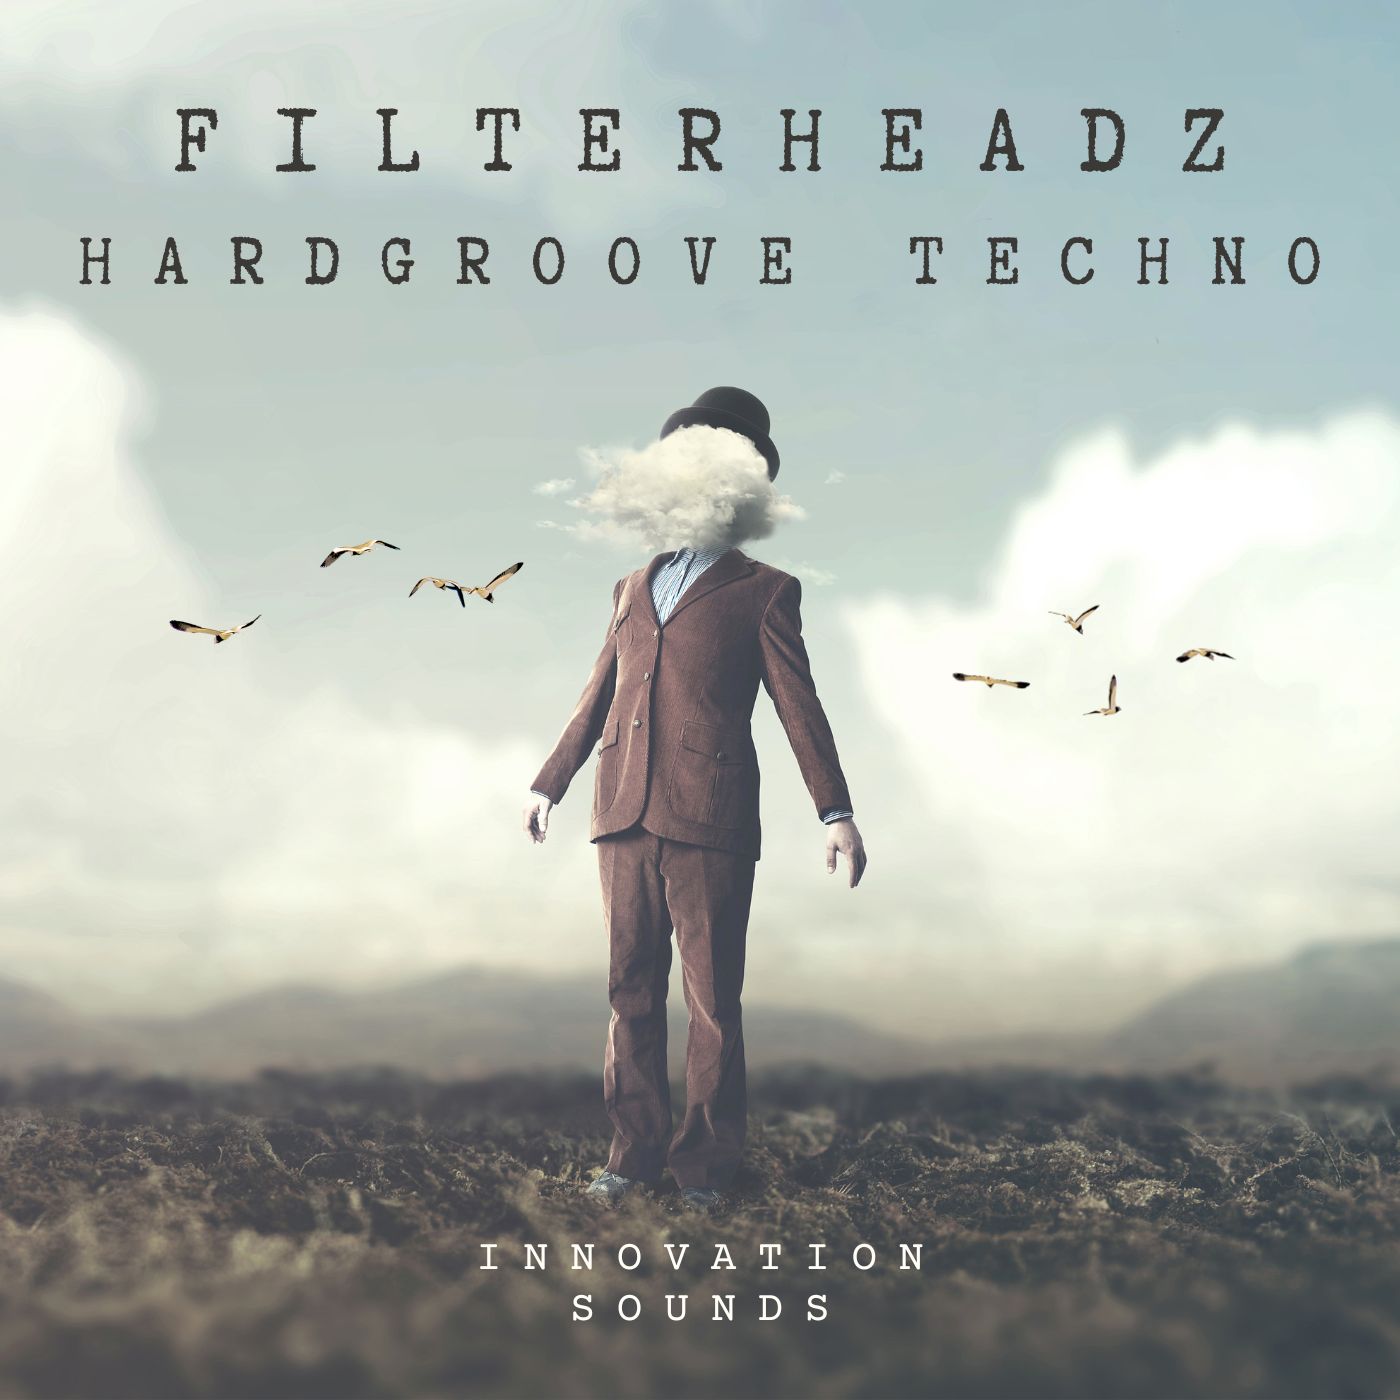 Filterheadz - Hardgroove Techno (Loops - One Shots Sample Pack)